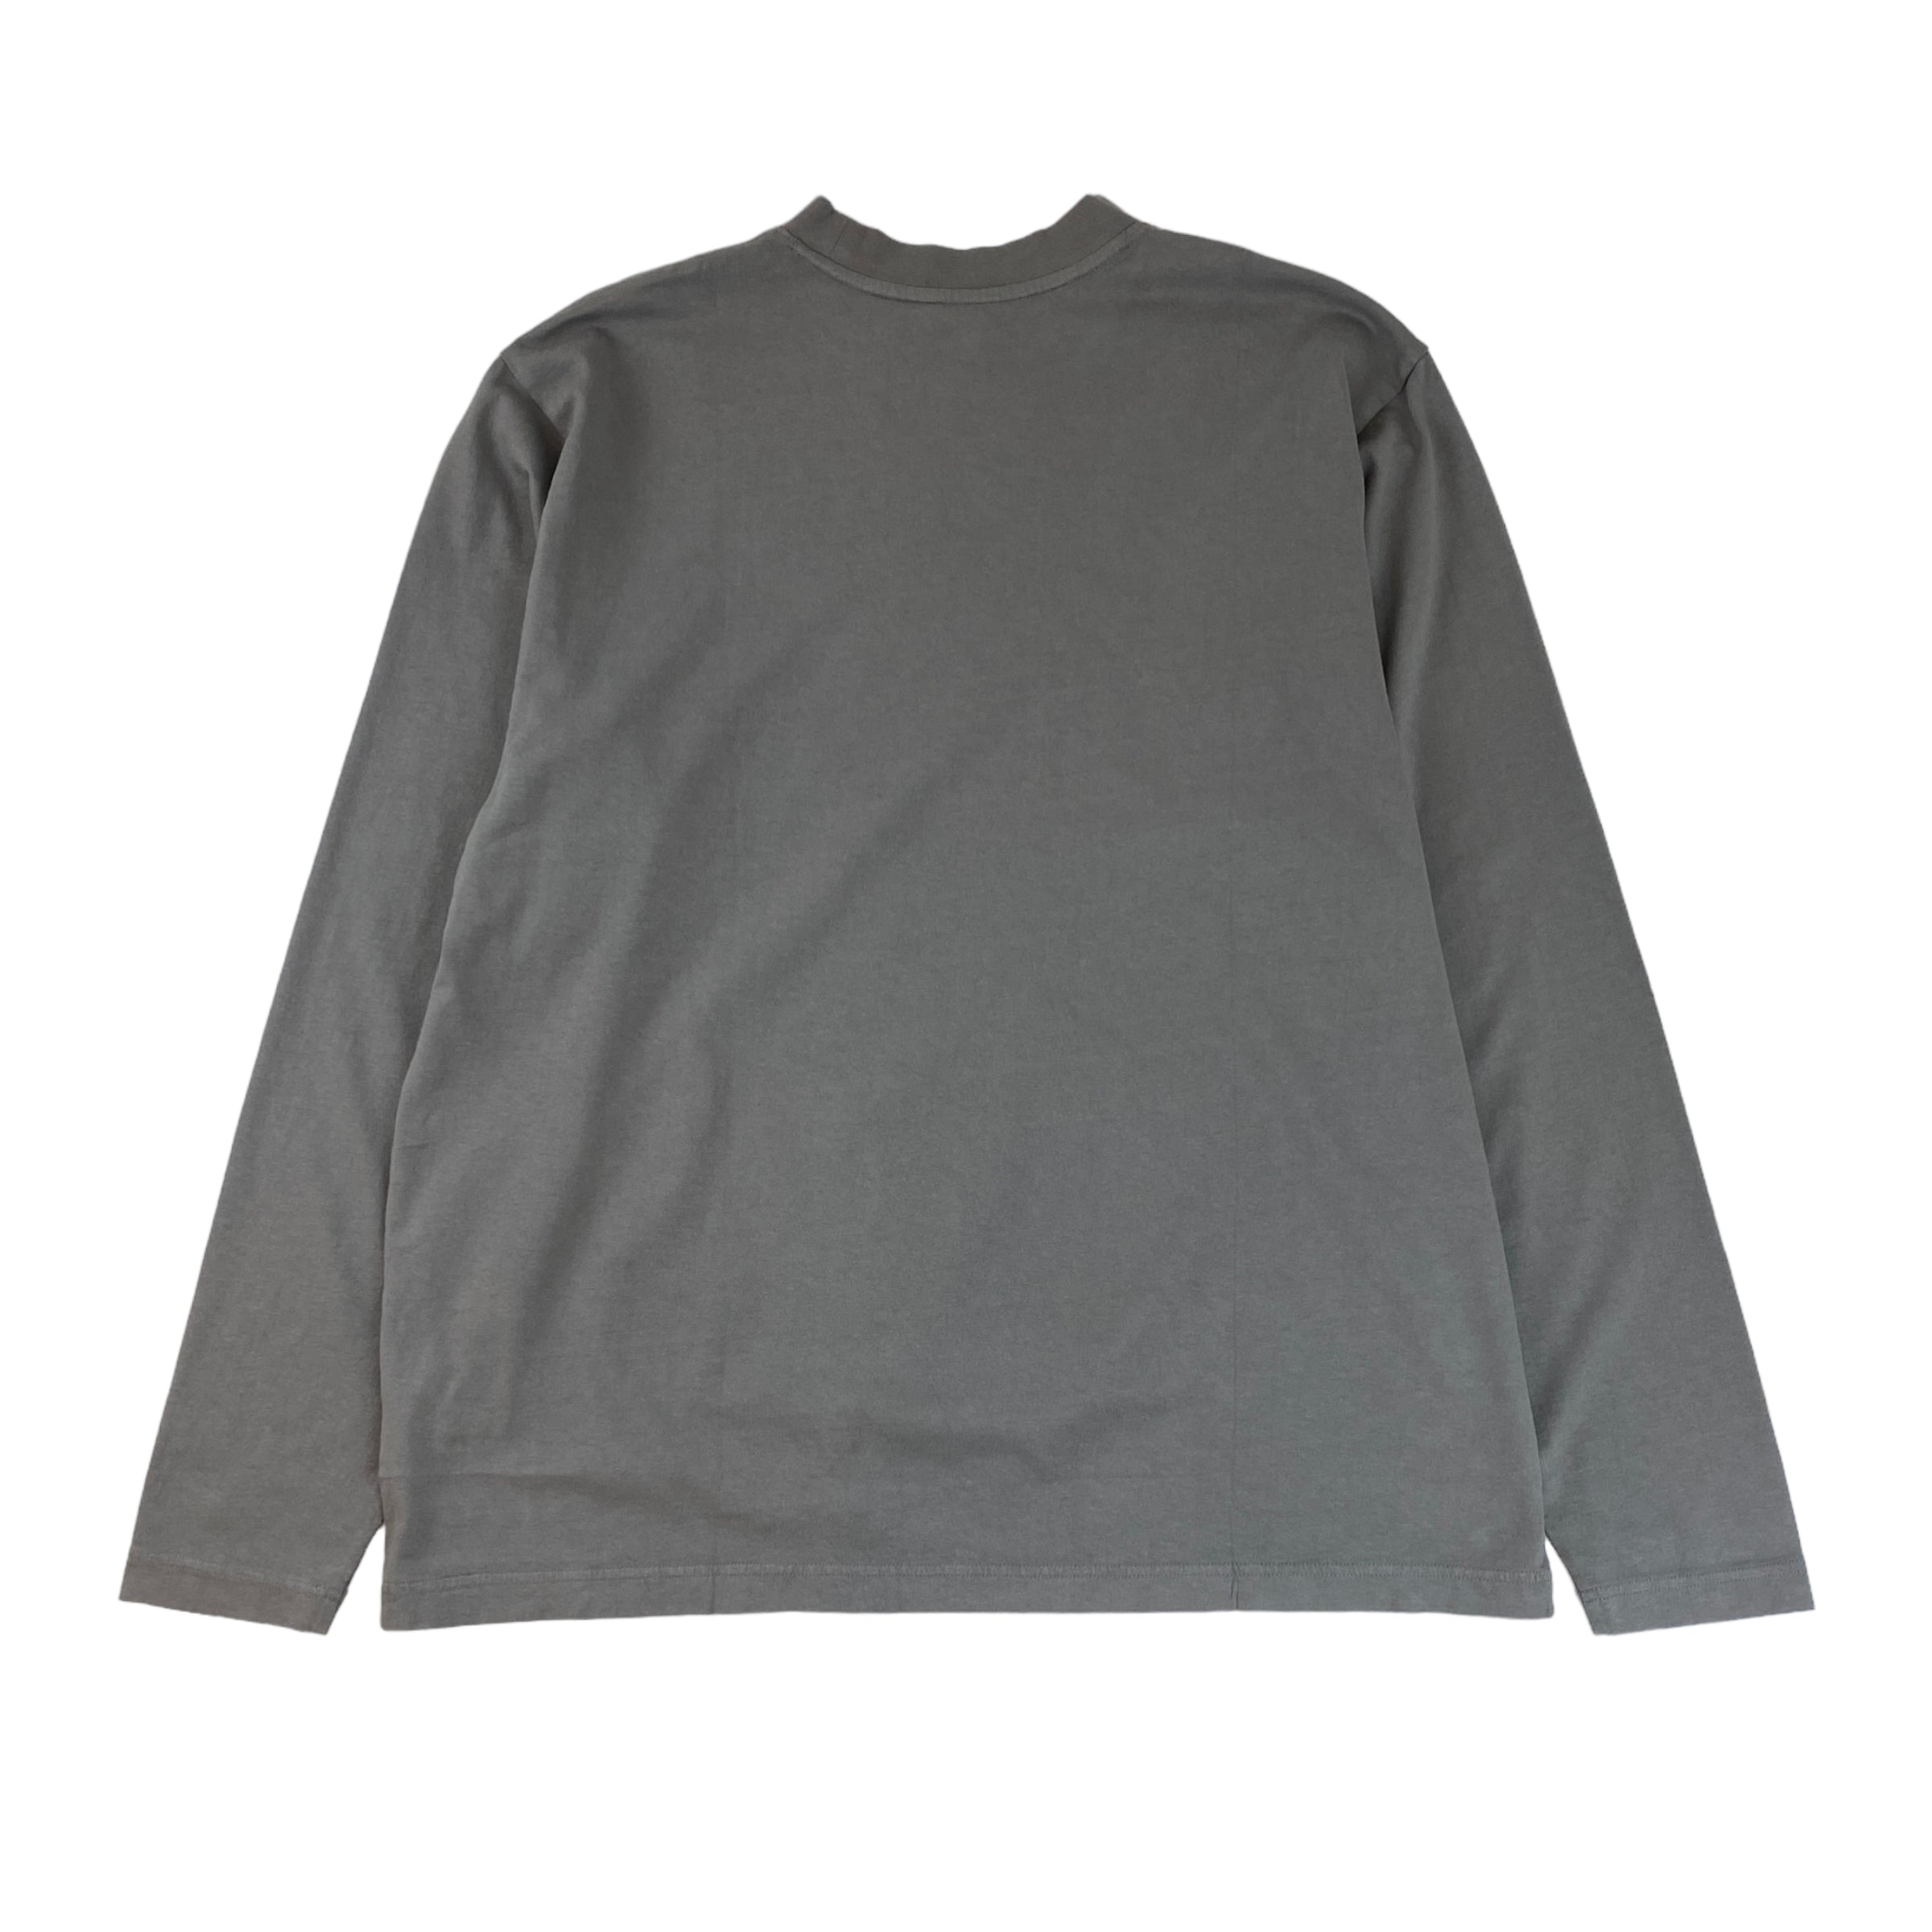 Yeezy x Gap Unreleased Longsleeve Shirt Light Grey